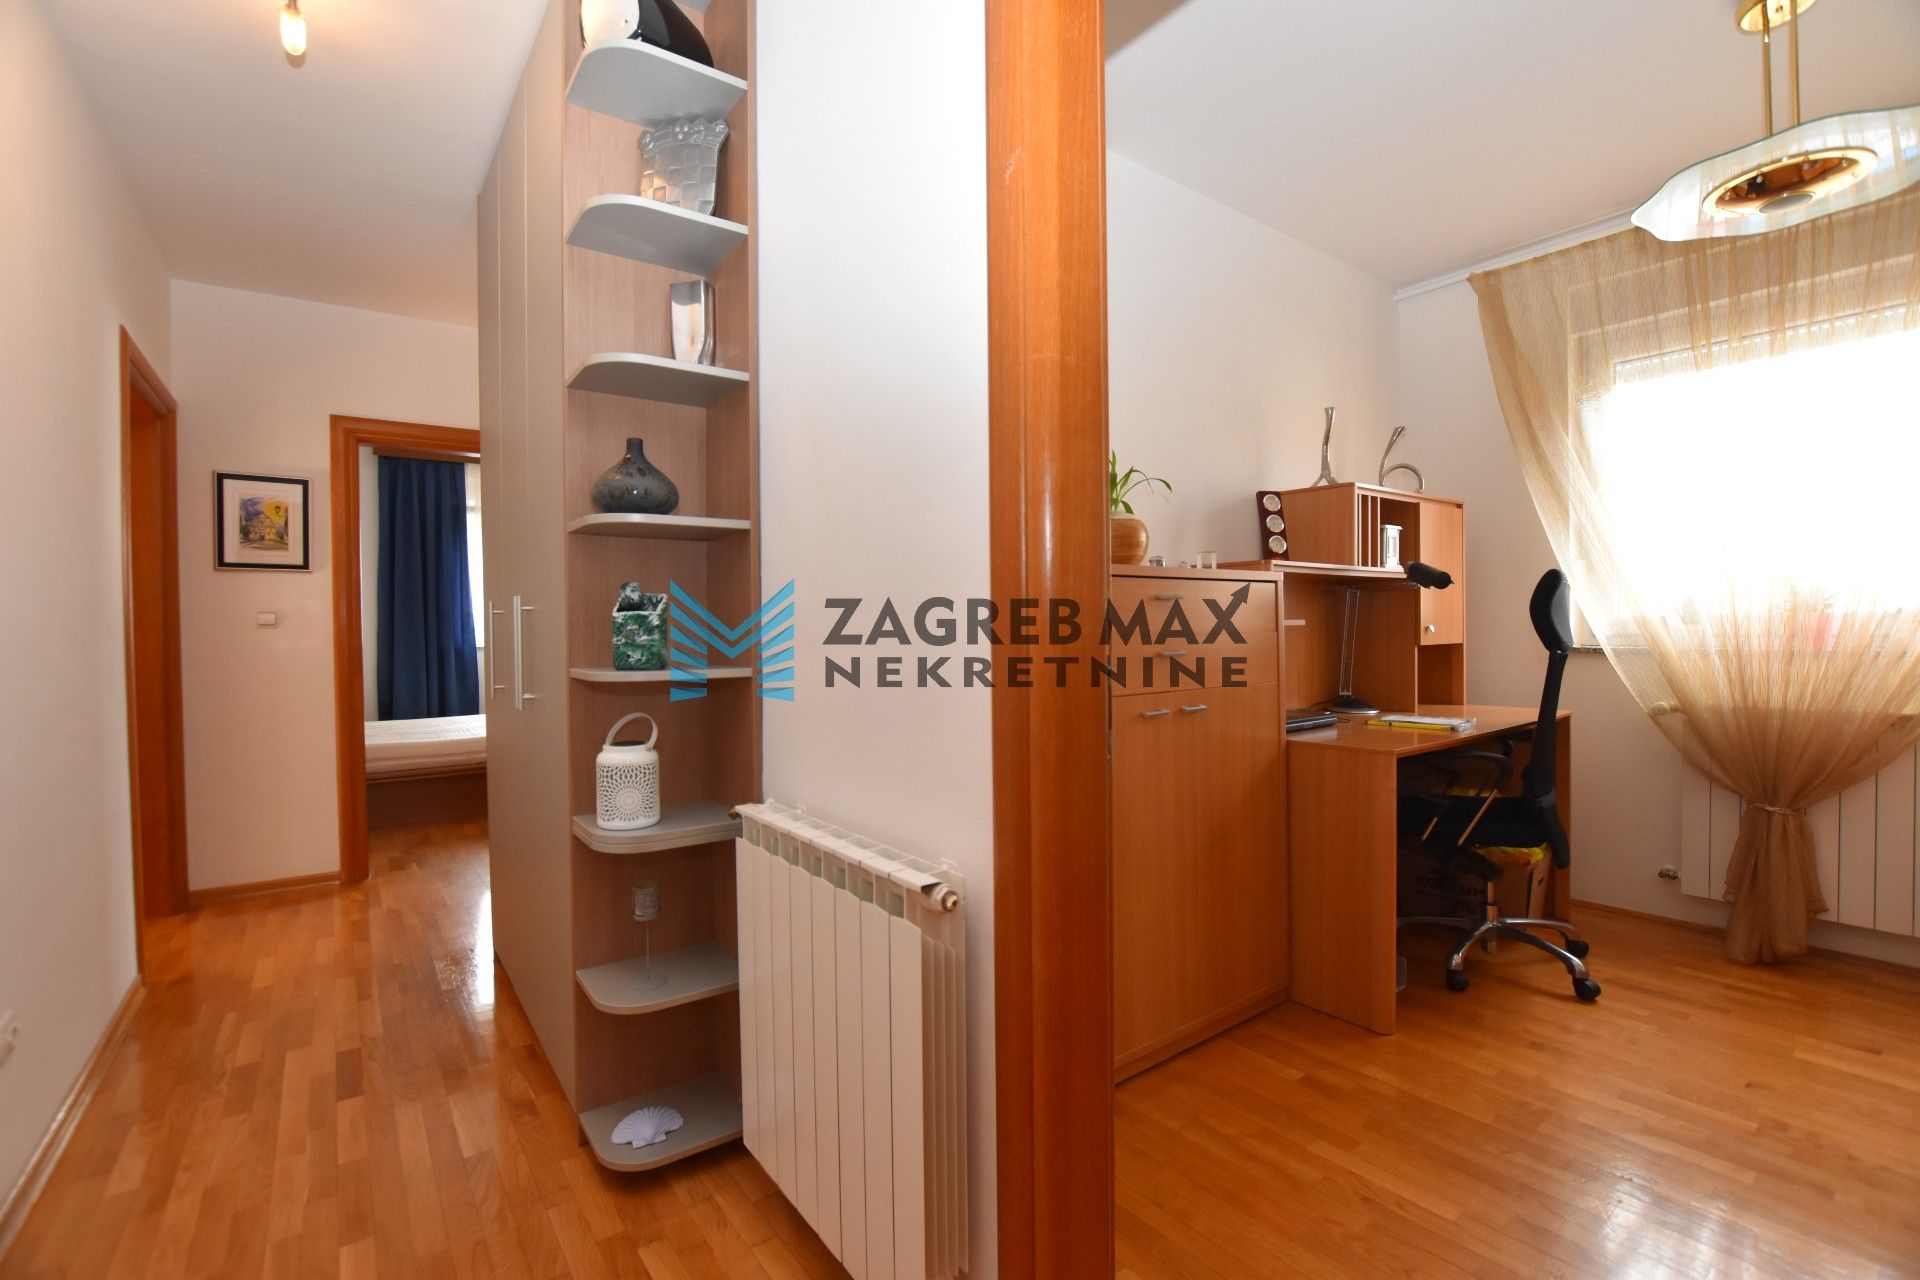 Zagreb - NAJAM MAKSIMIR Gornji Bukovac, prostran 4soban stan 100 m2, 2x parkinga, prizemlje, mirno okruženje